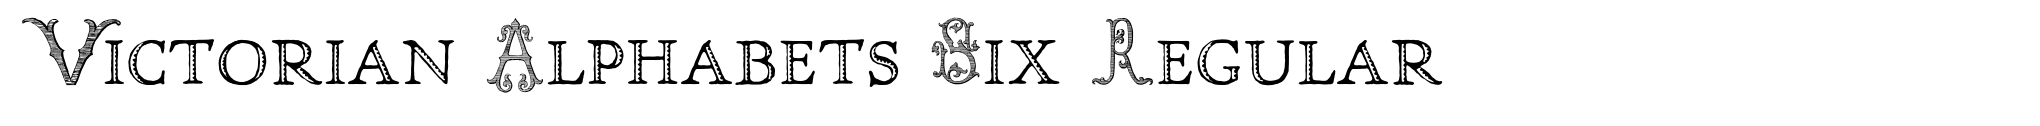 Victorian Alphabets Six Regular image